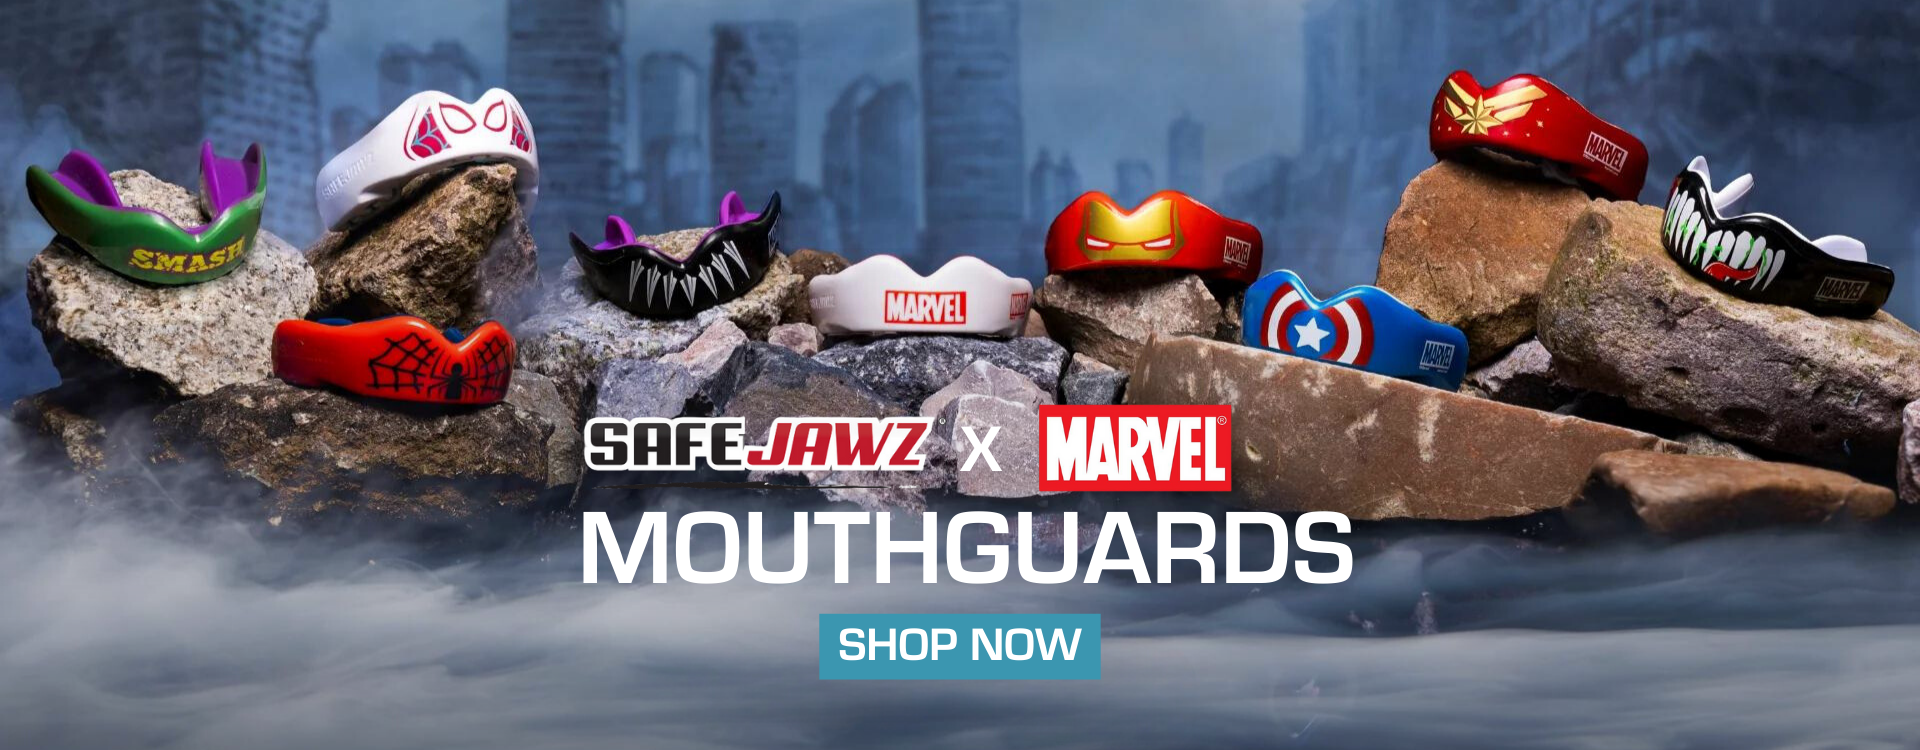 Marvel X Safejawz Mouthguards